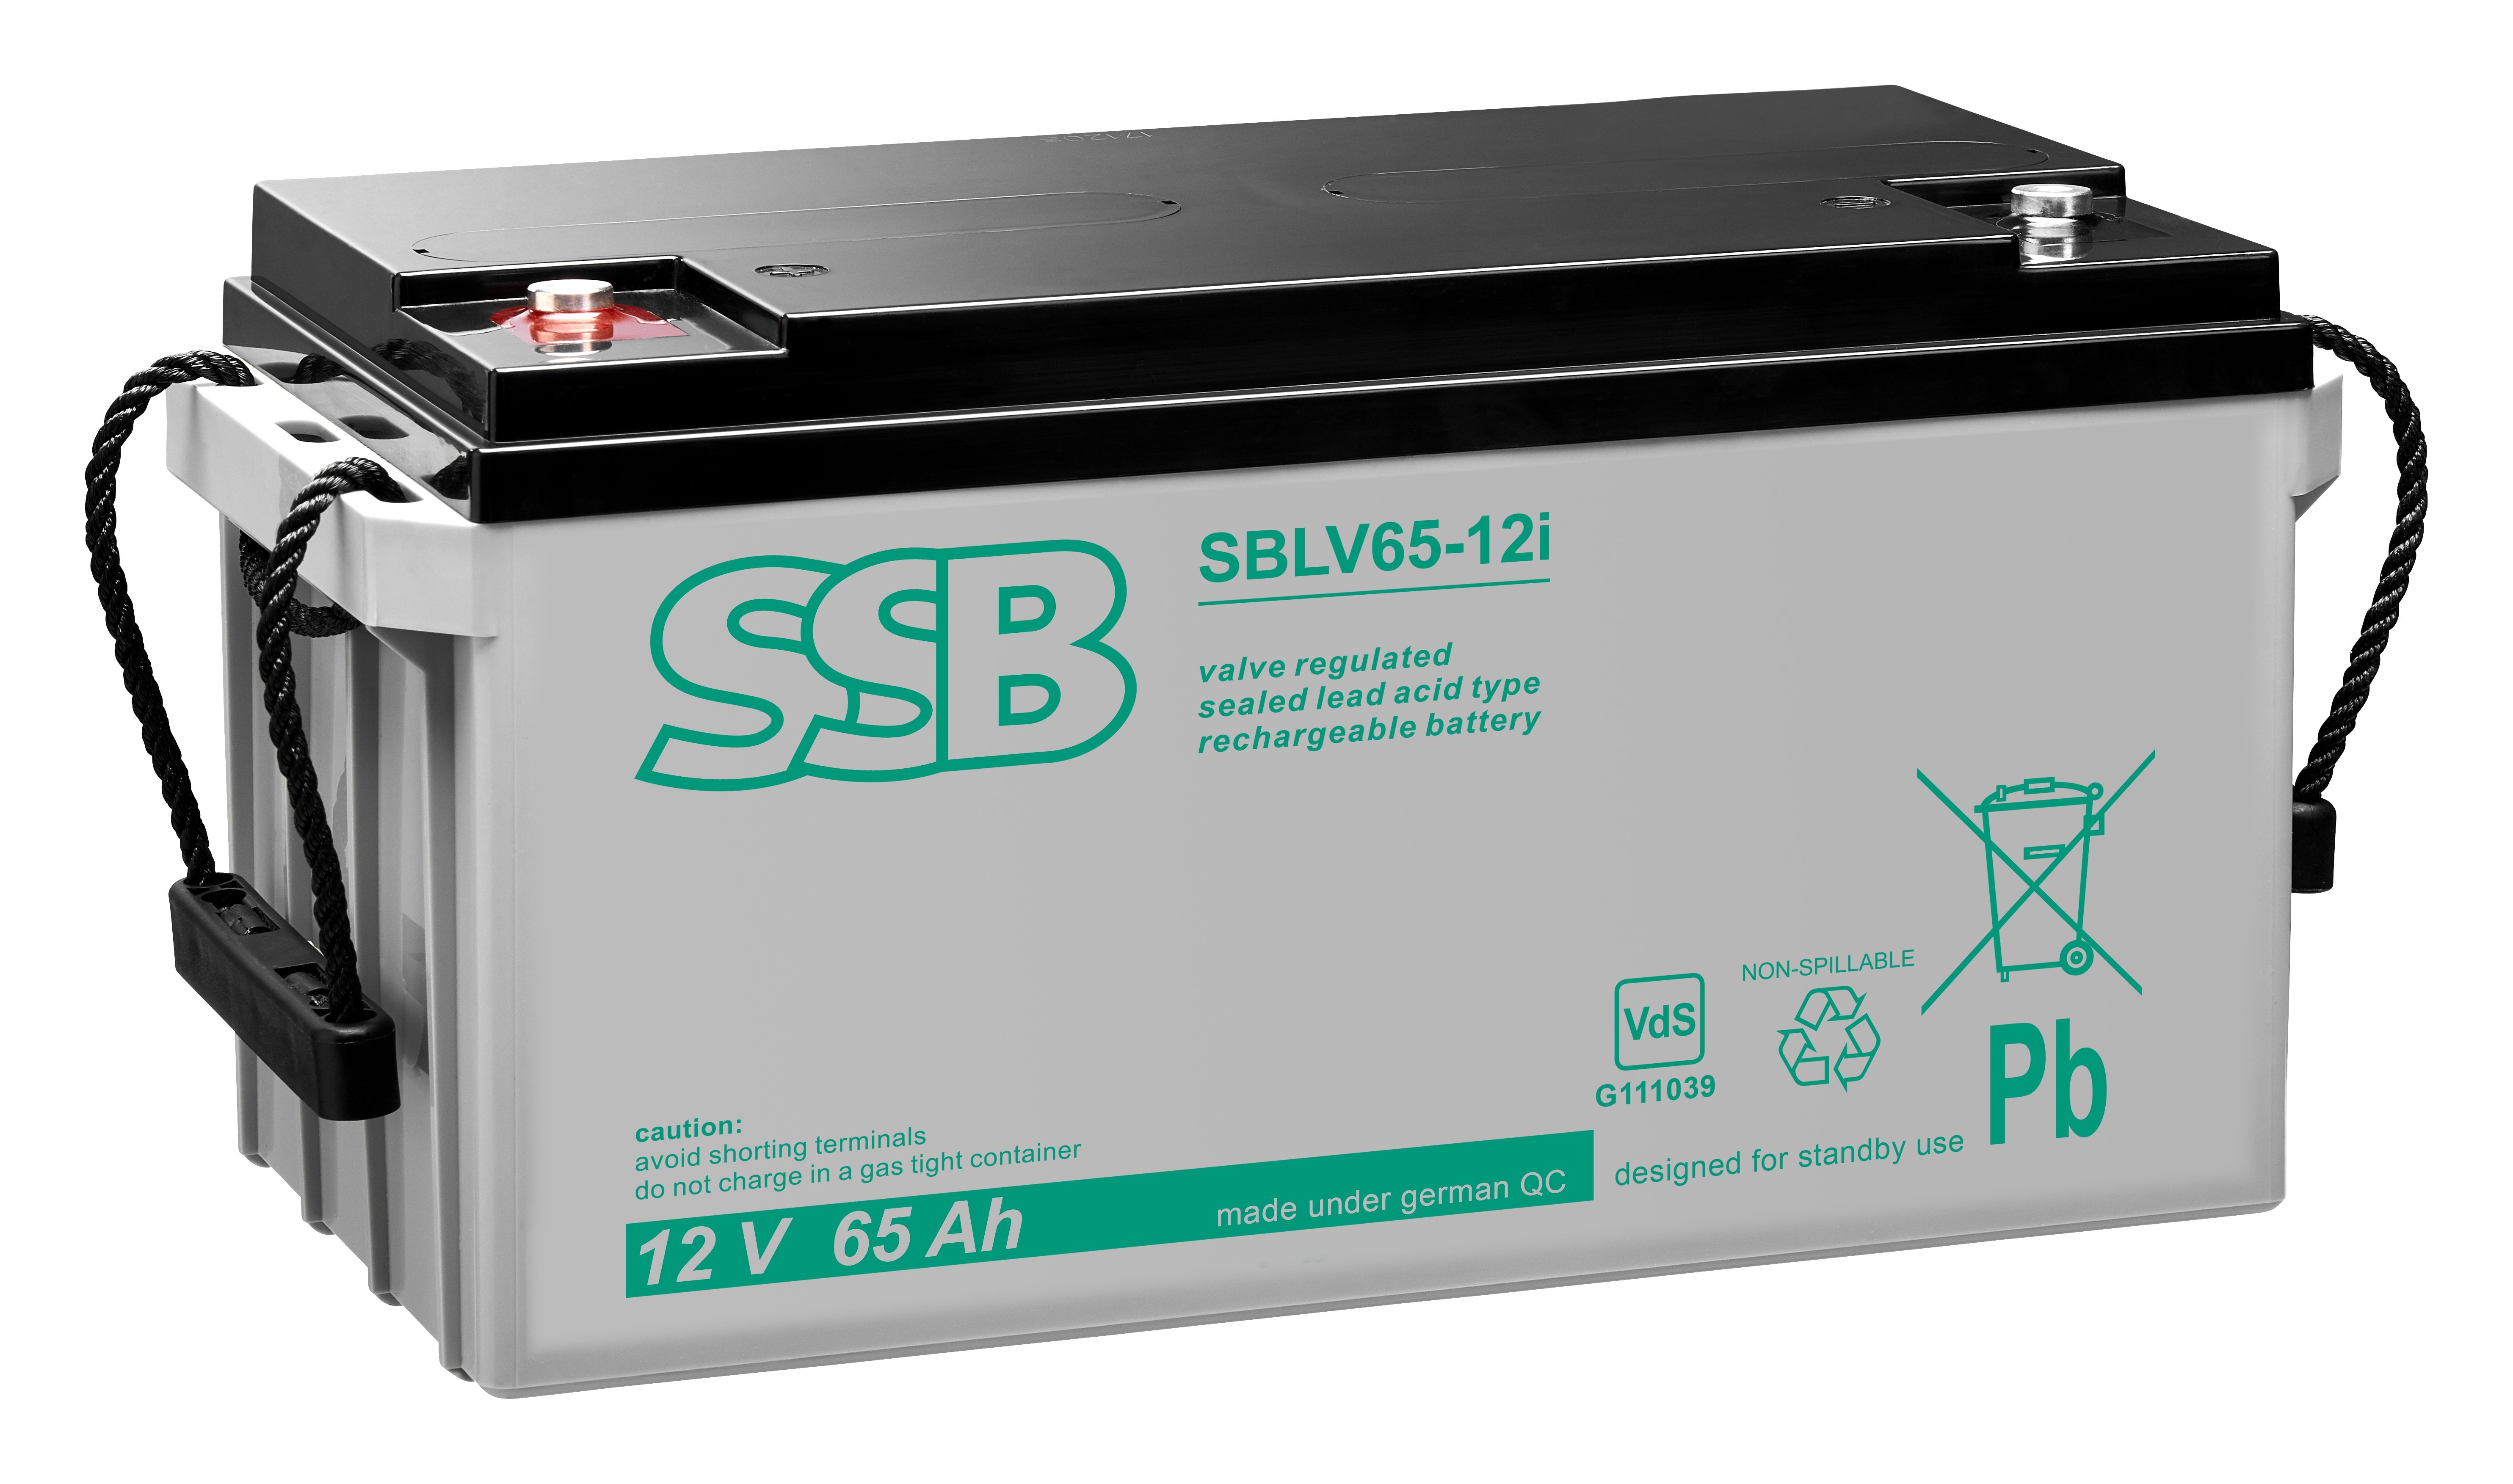 SSB Blei Akku SBL 65-12i AGM Batterie - 12V 65Ah